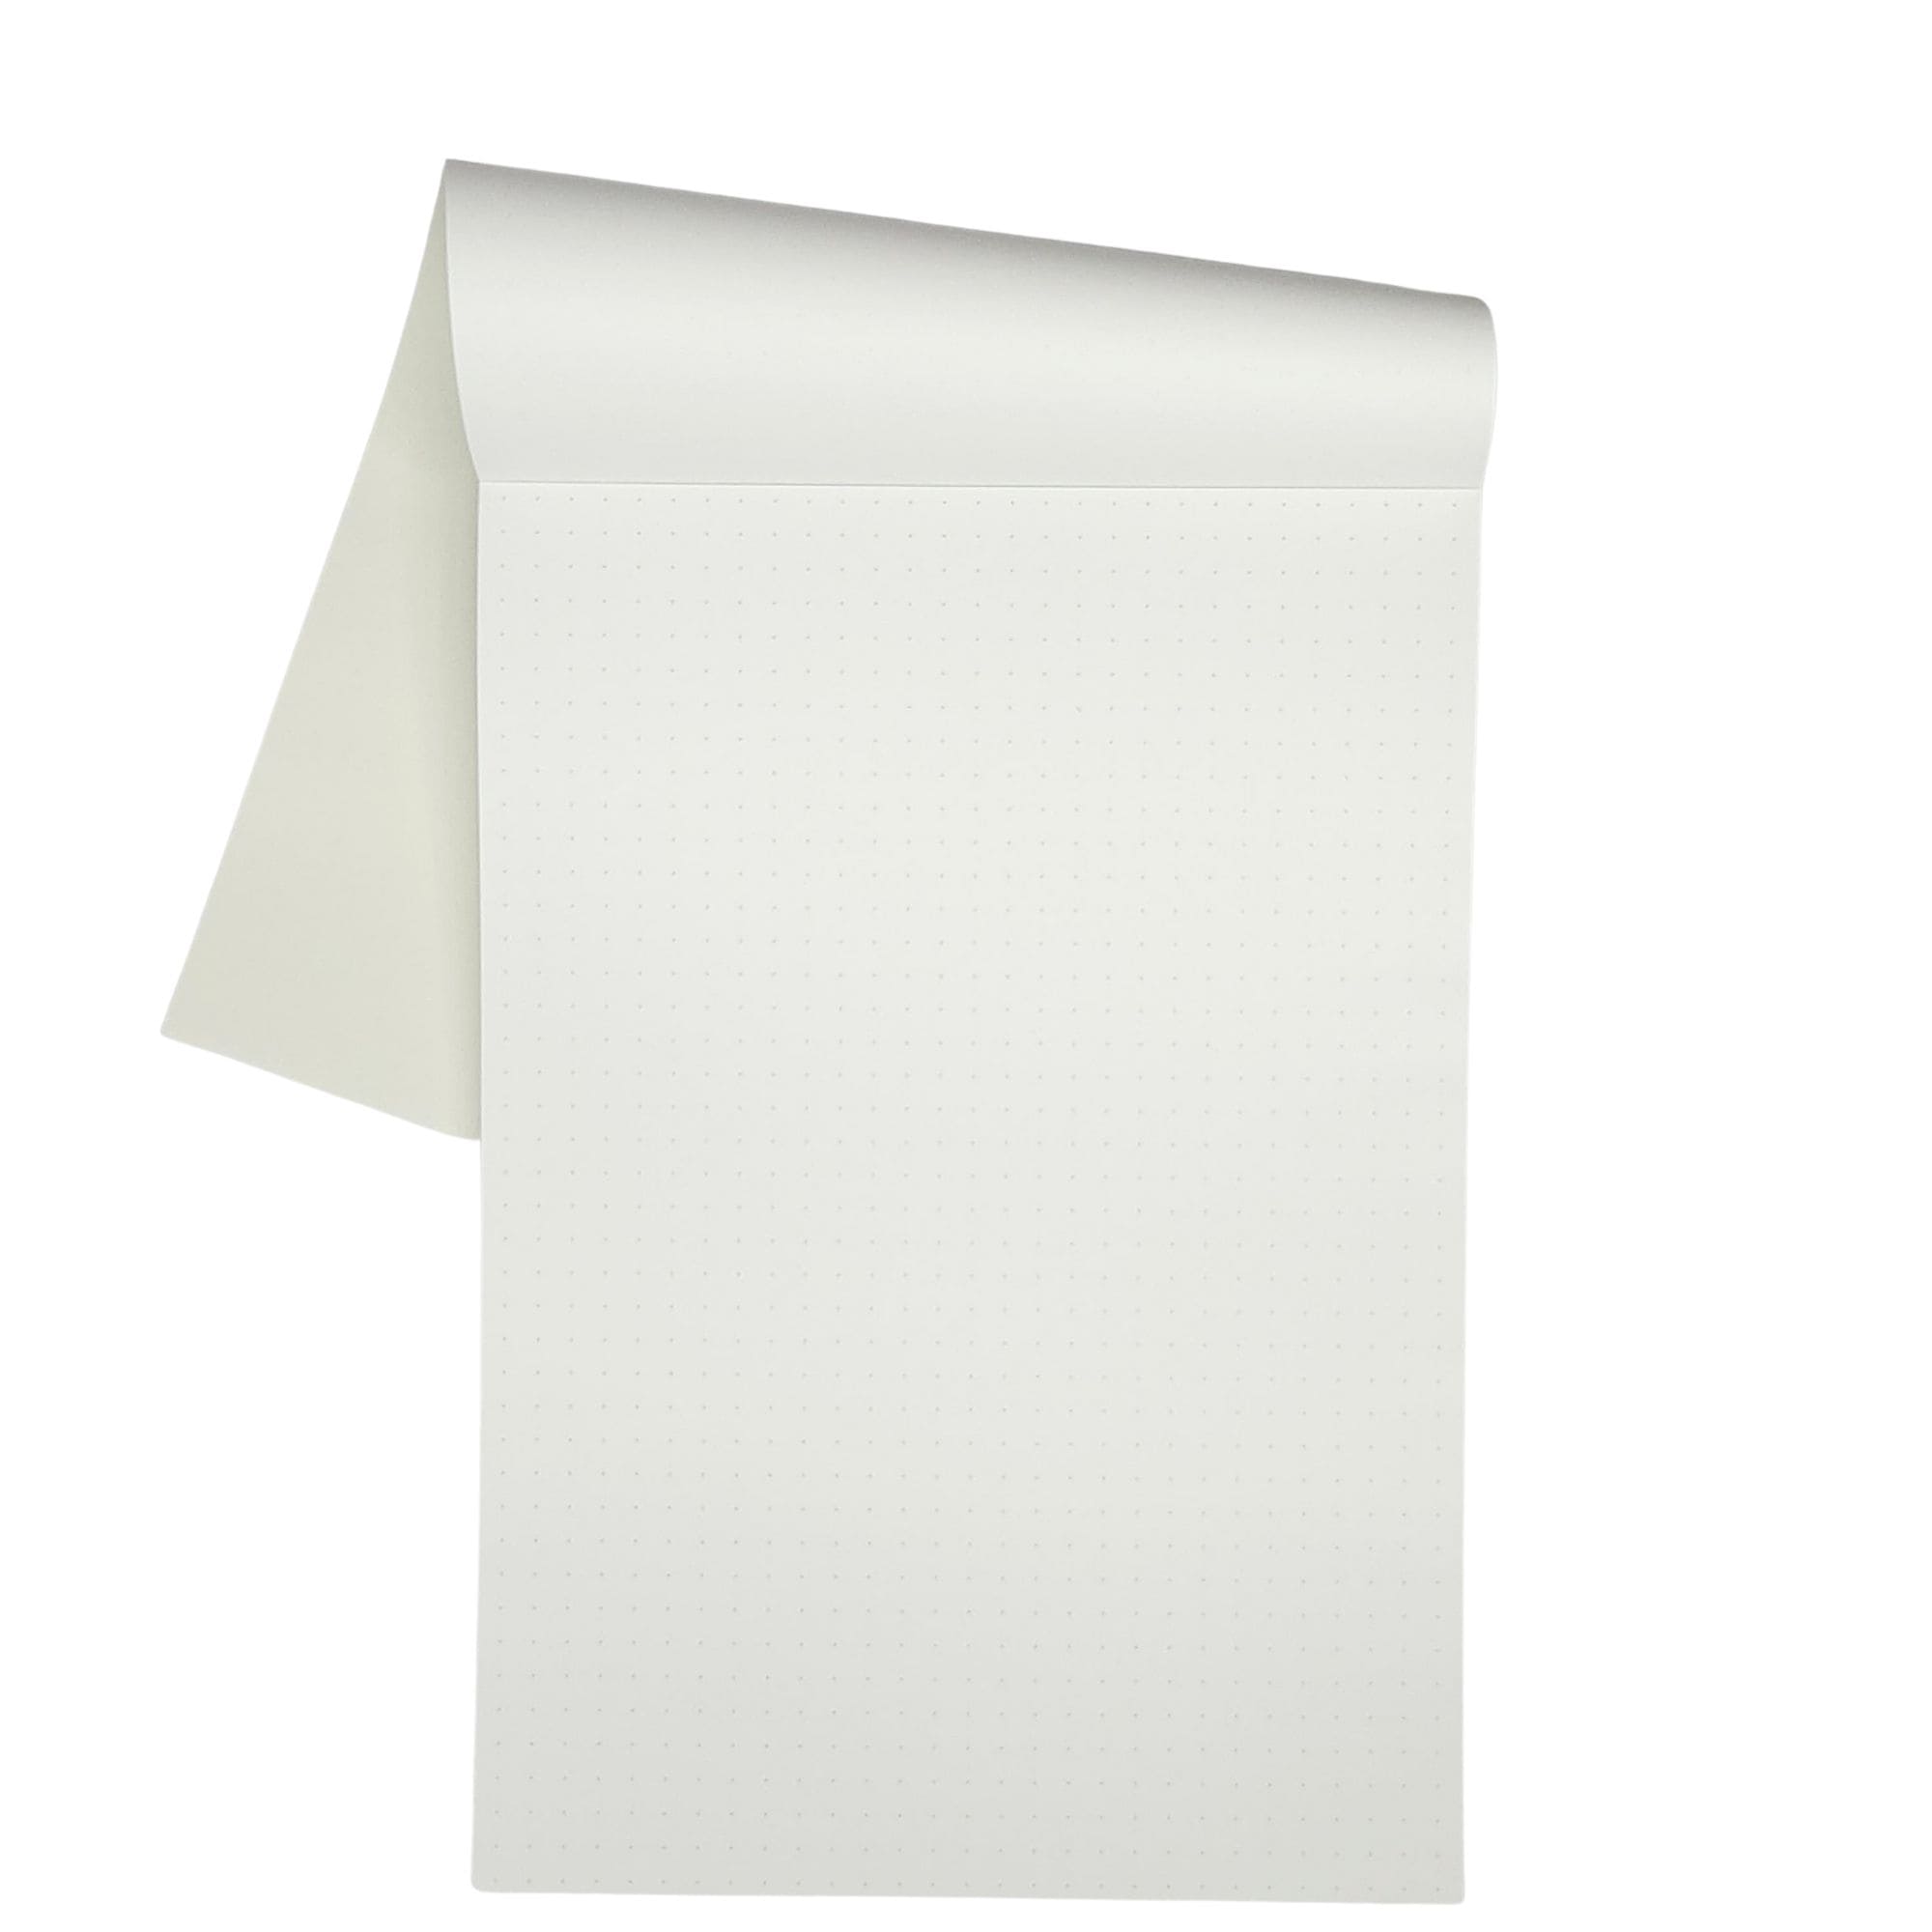 Midori A5 White Dotted Notepad open - Paper Kooka Australia